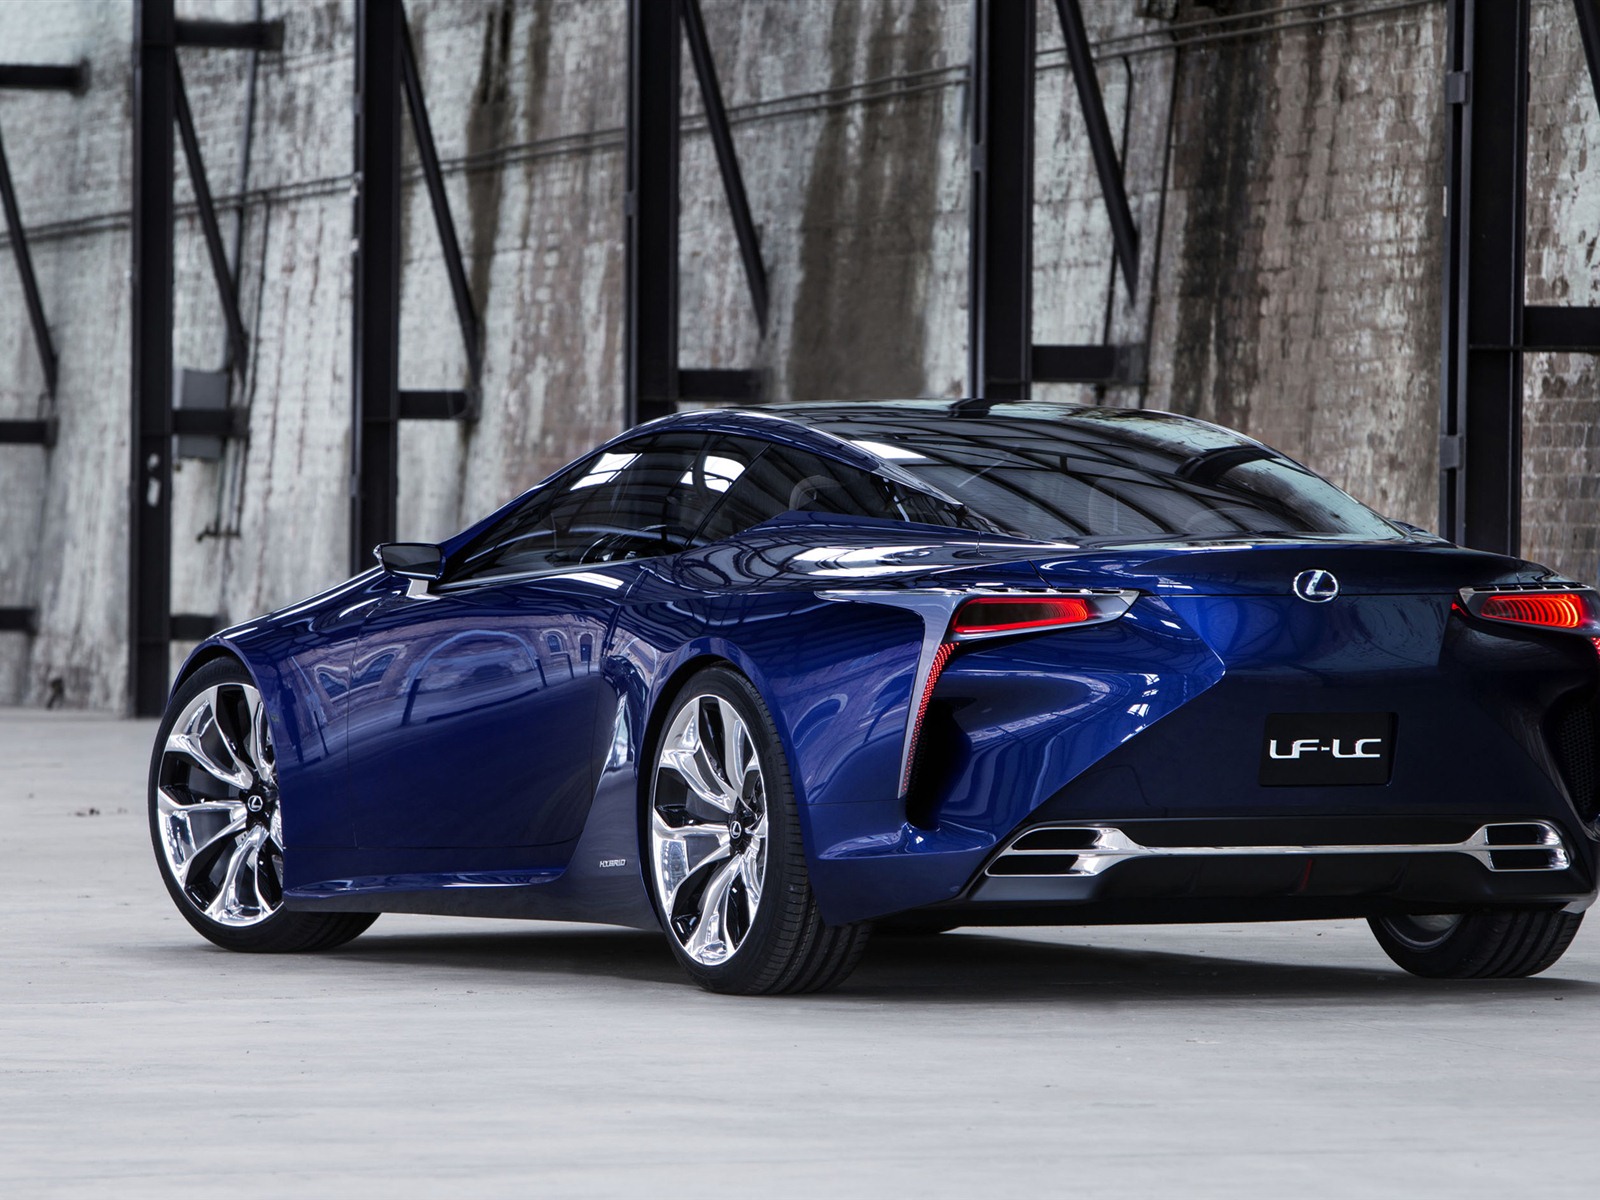 2012 Lexus LF-LC Blue concept 雷克萨斯 蓝色概念车 高清壁纸5 - 1600x1200